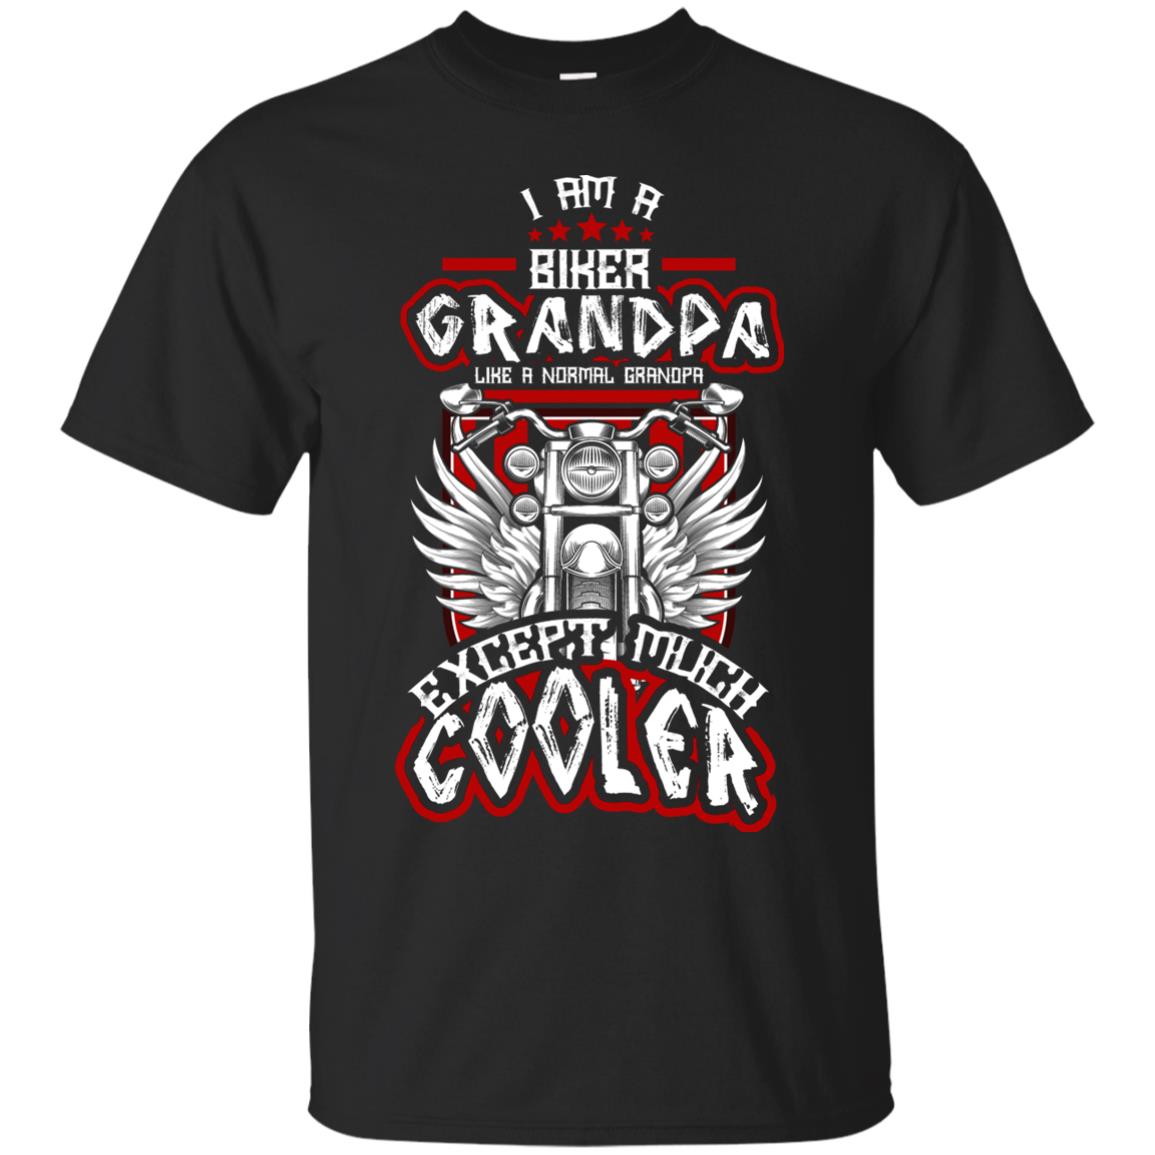 I Am A Biker Grandpa Like A Normal Grandpa Bike T-shirt For Papa